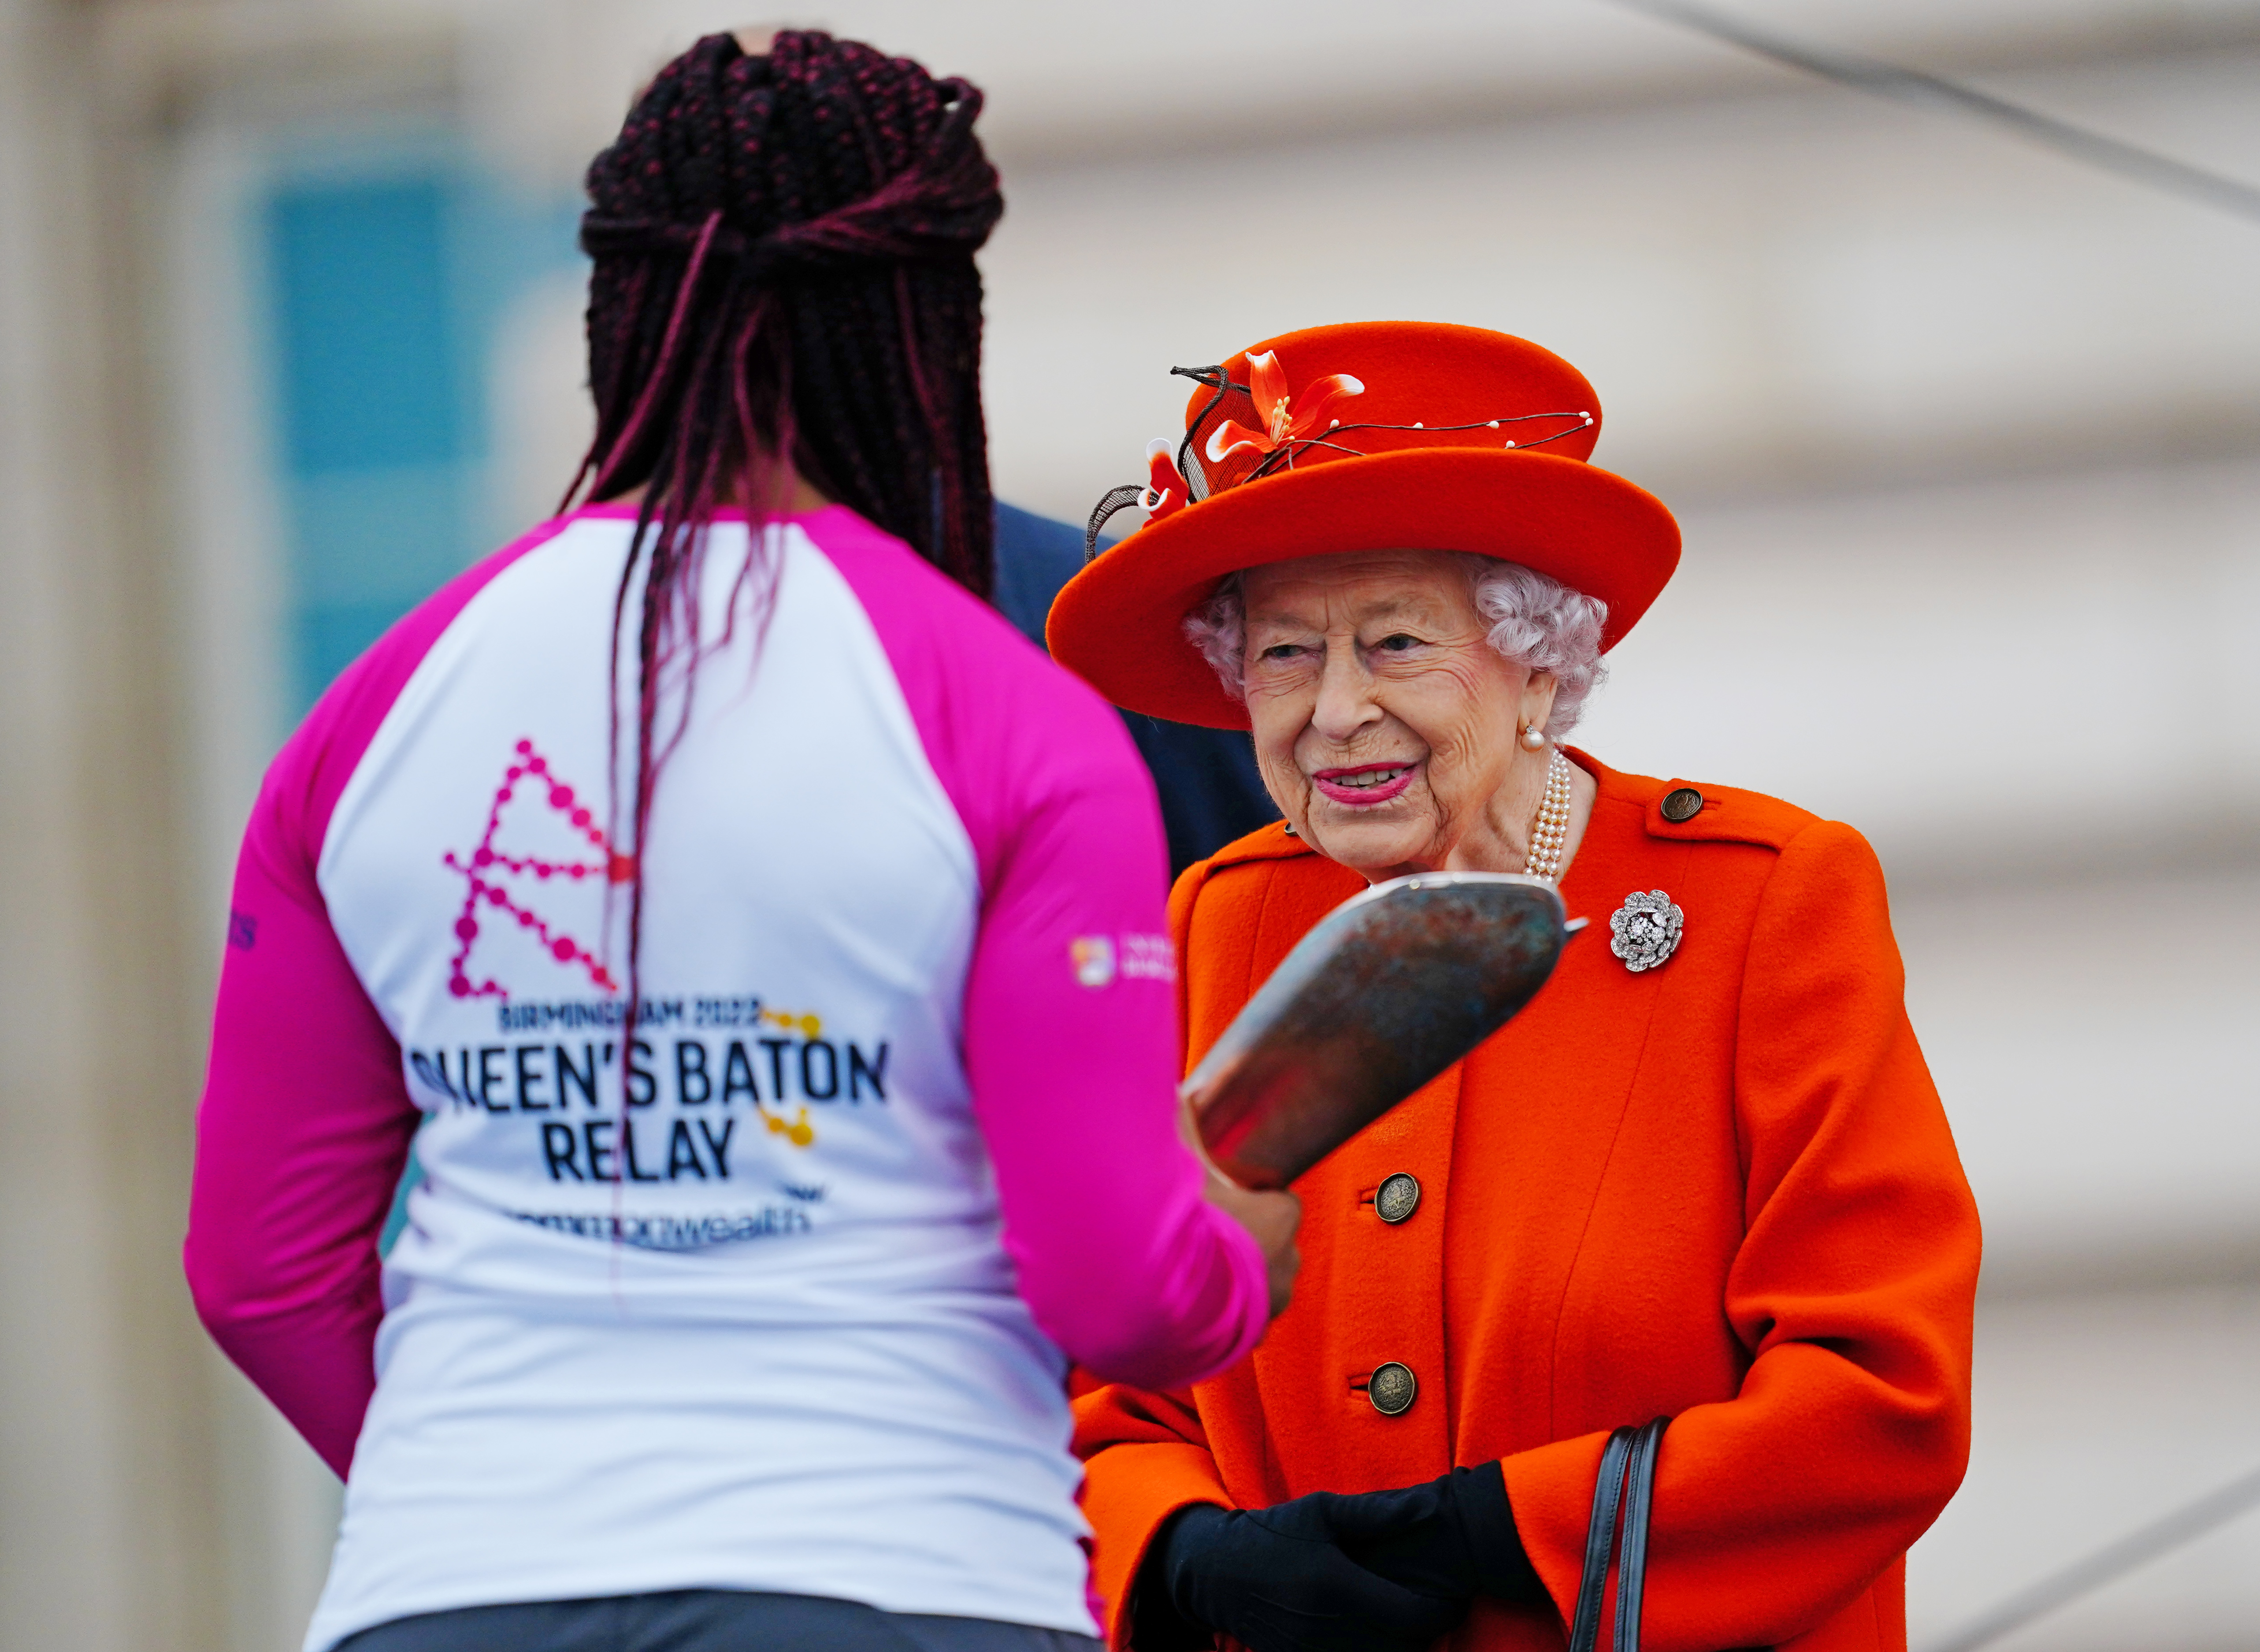 The Queen alongside the Queen's Baton